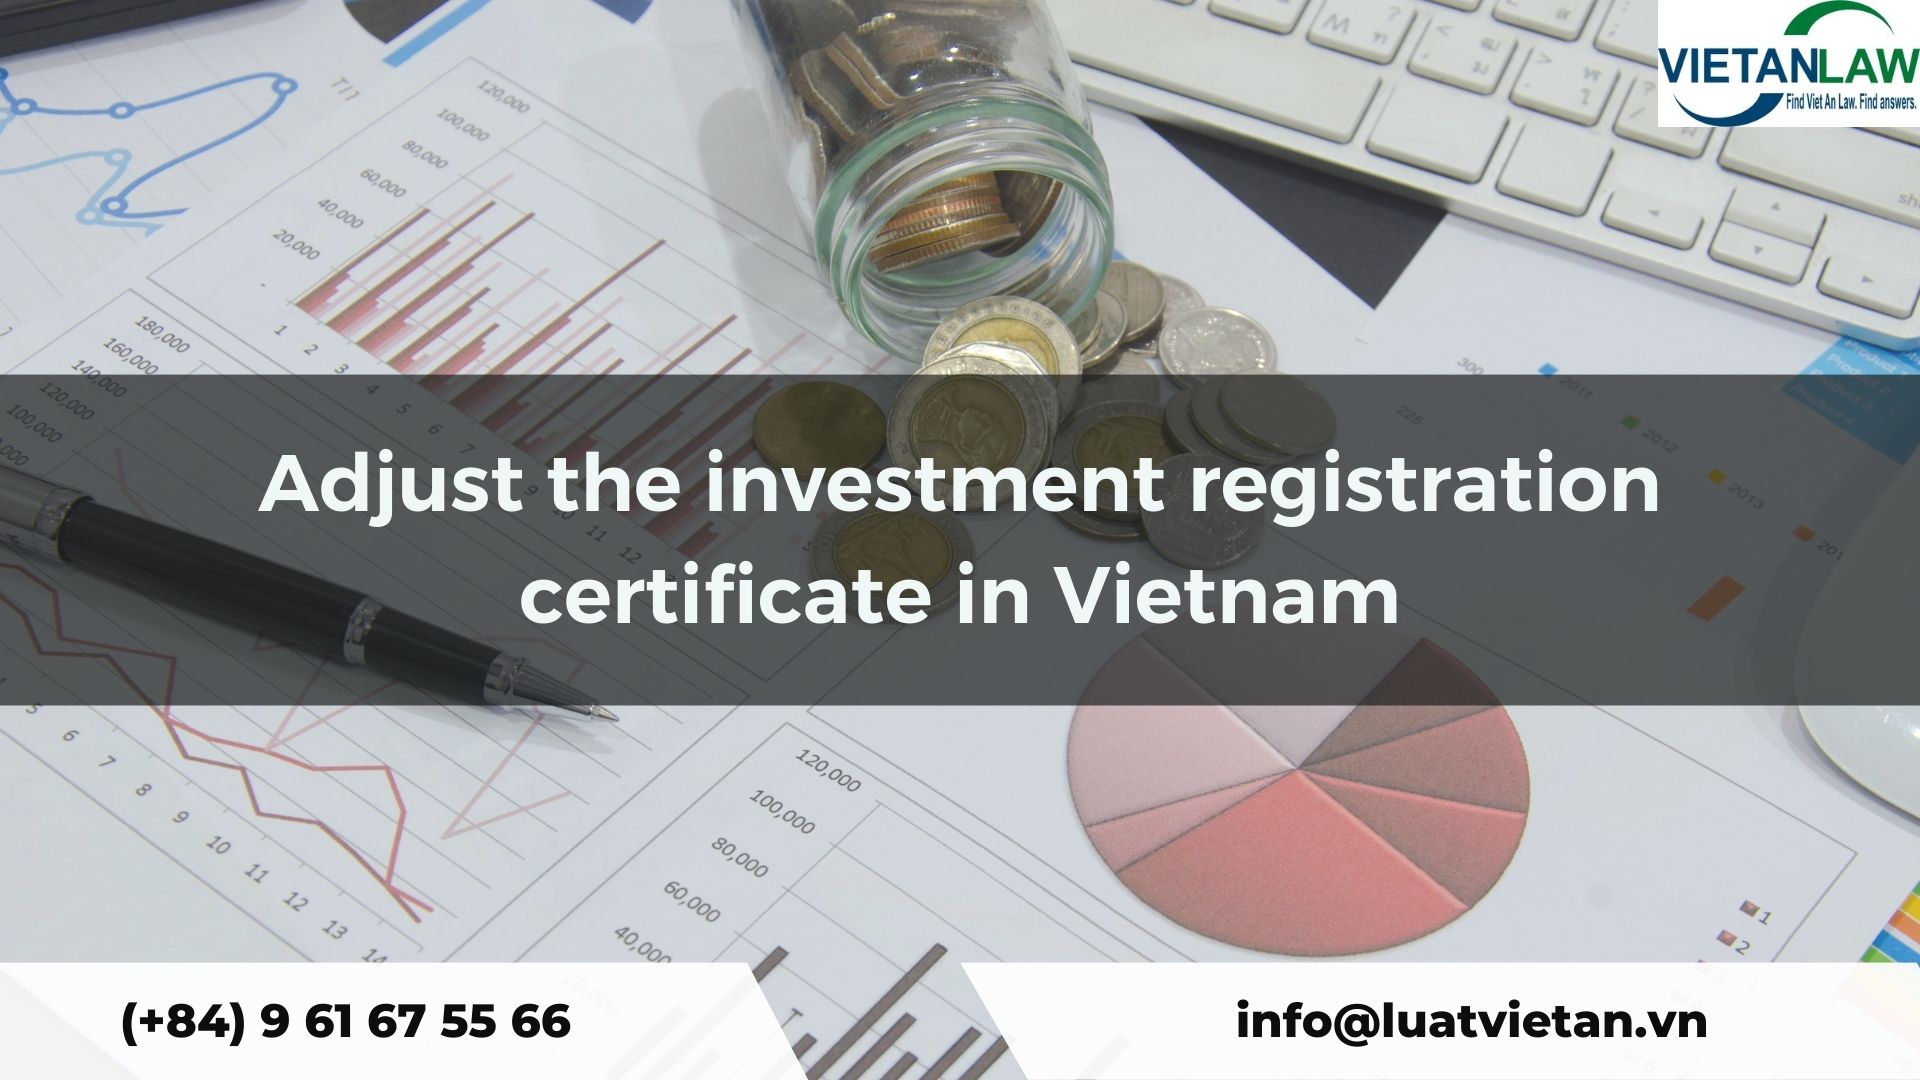 Adjust the investment registration certificates in Vietnam